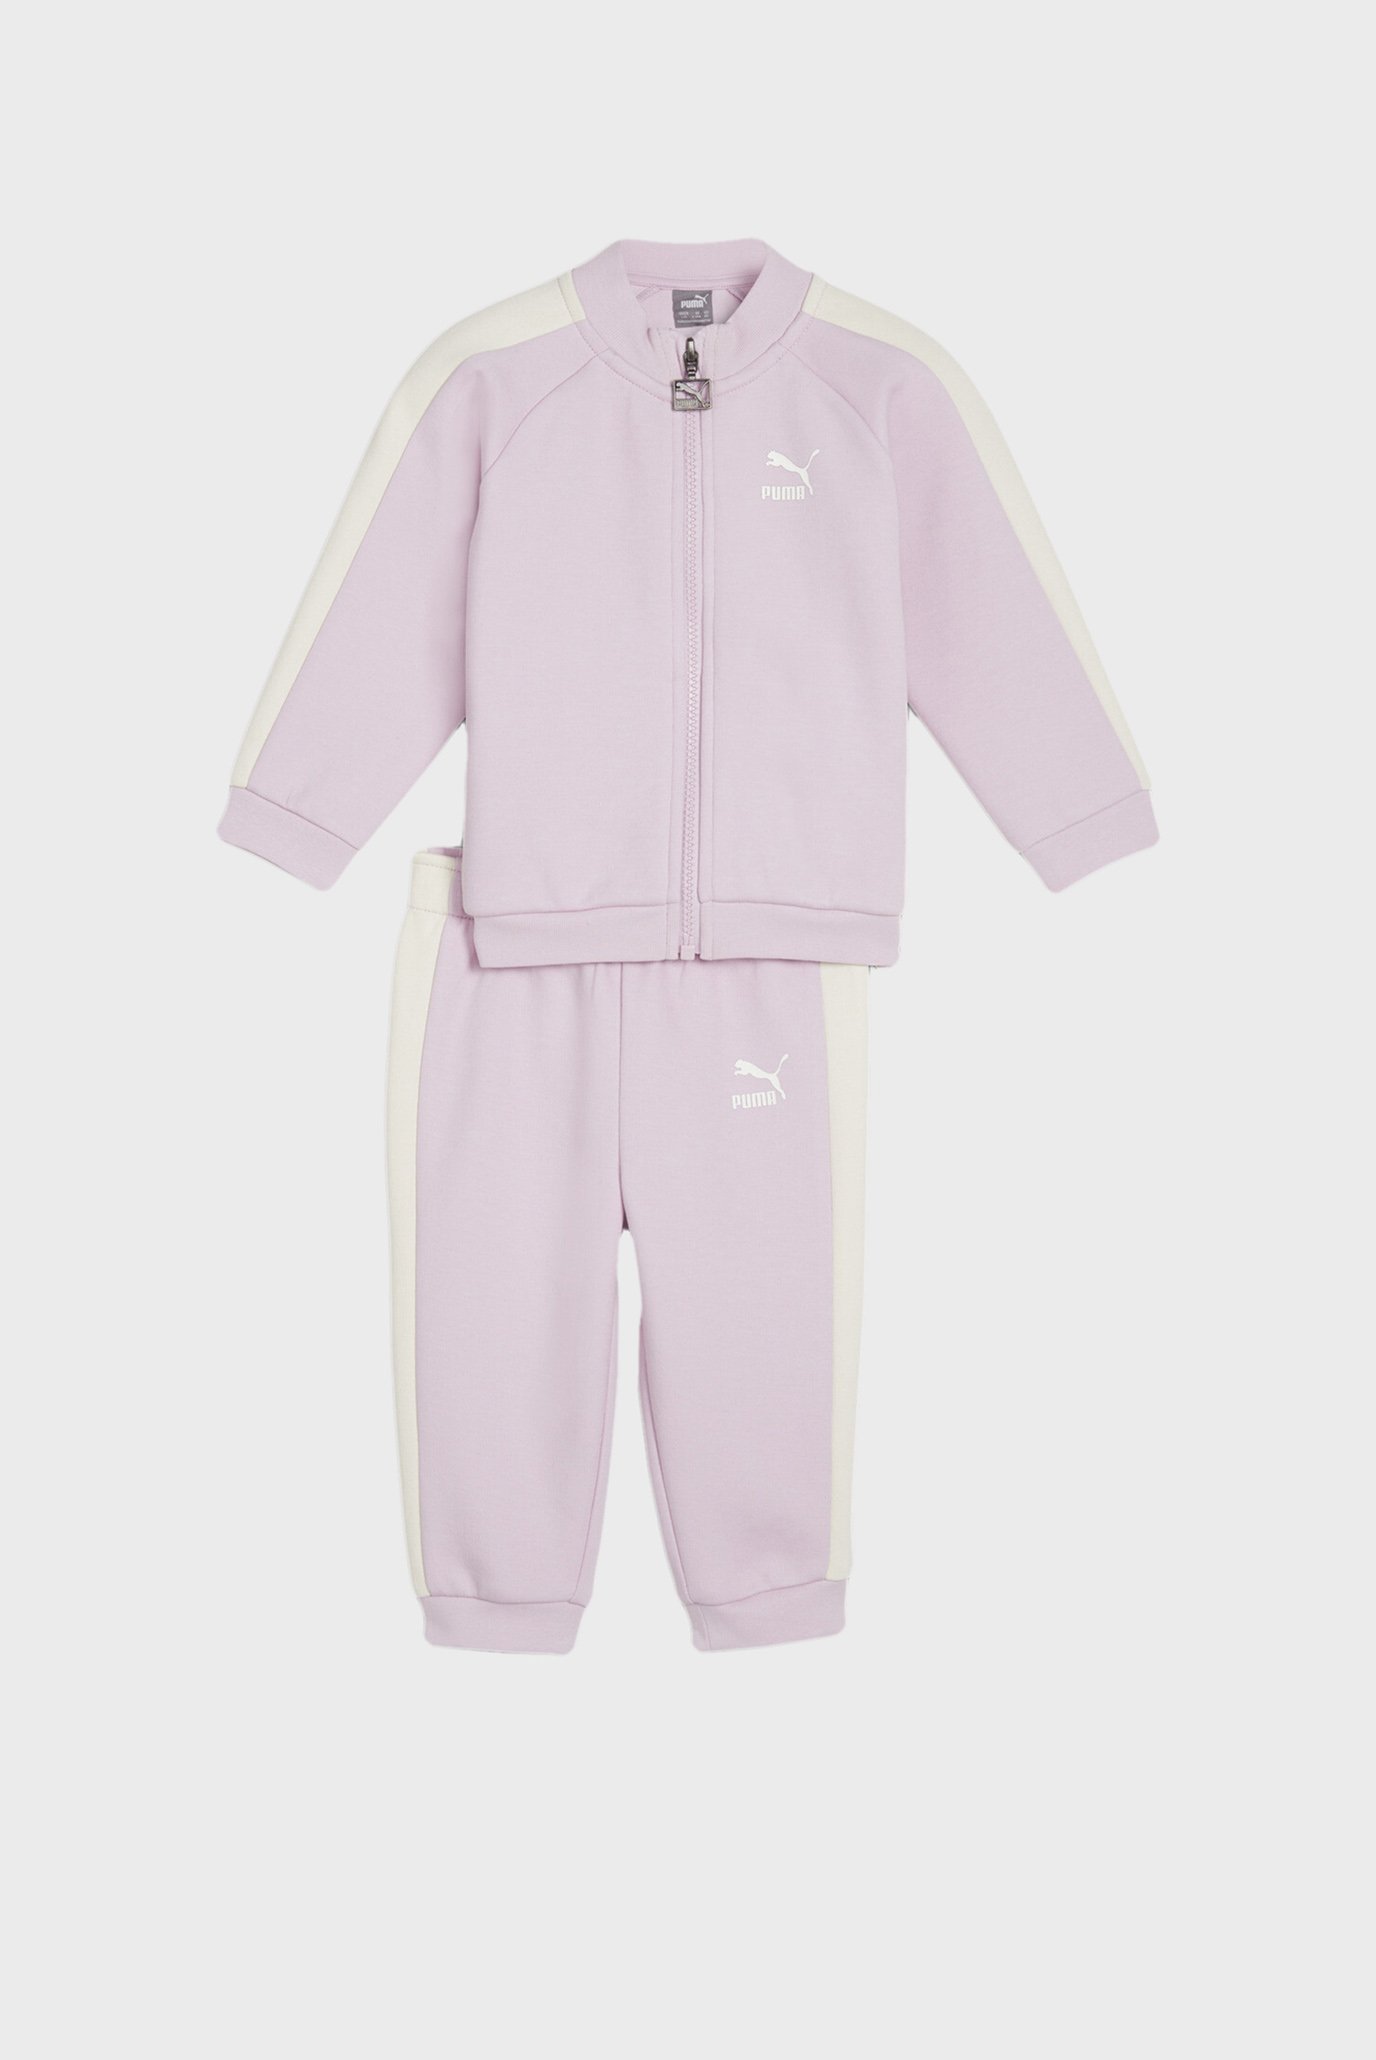 Дитячий рожевий спортивний костюм (кофта, штани) MINICATS T7 ICONIC Baby Tracksuit Set 1